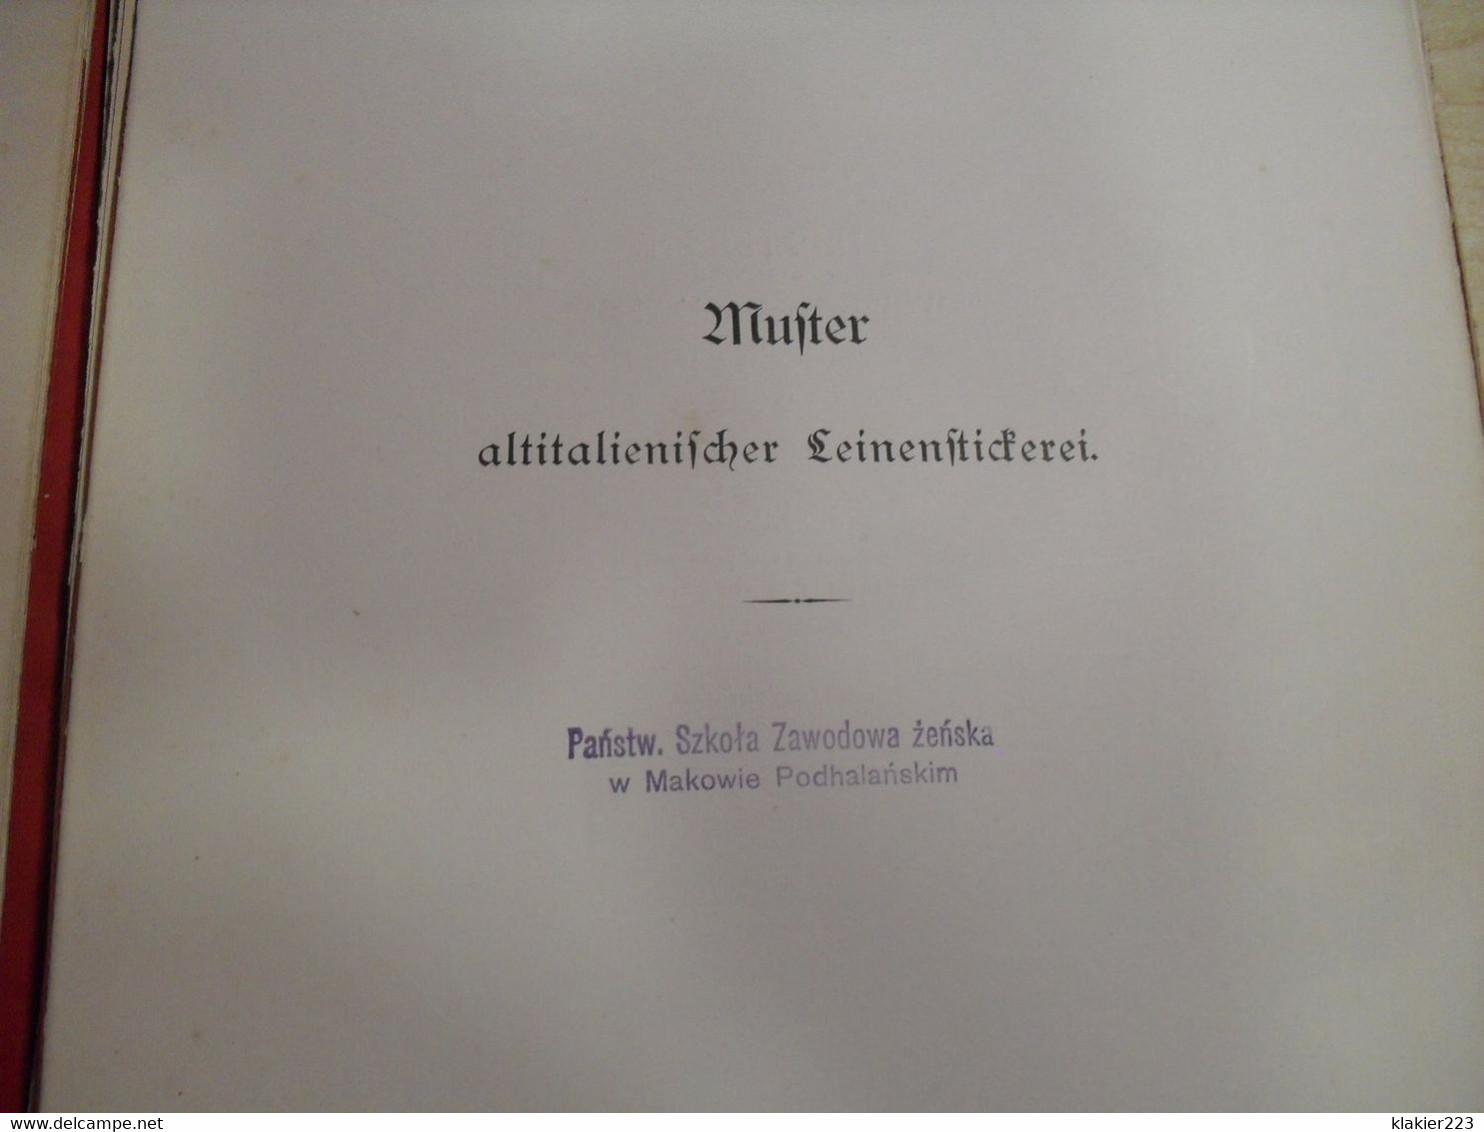 LIPPERHEIDE Frieda - Muster Altitalienischer Leinenstickerei, Berlin 1883